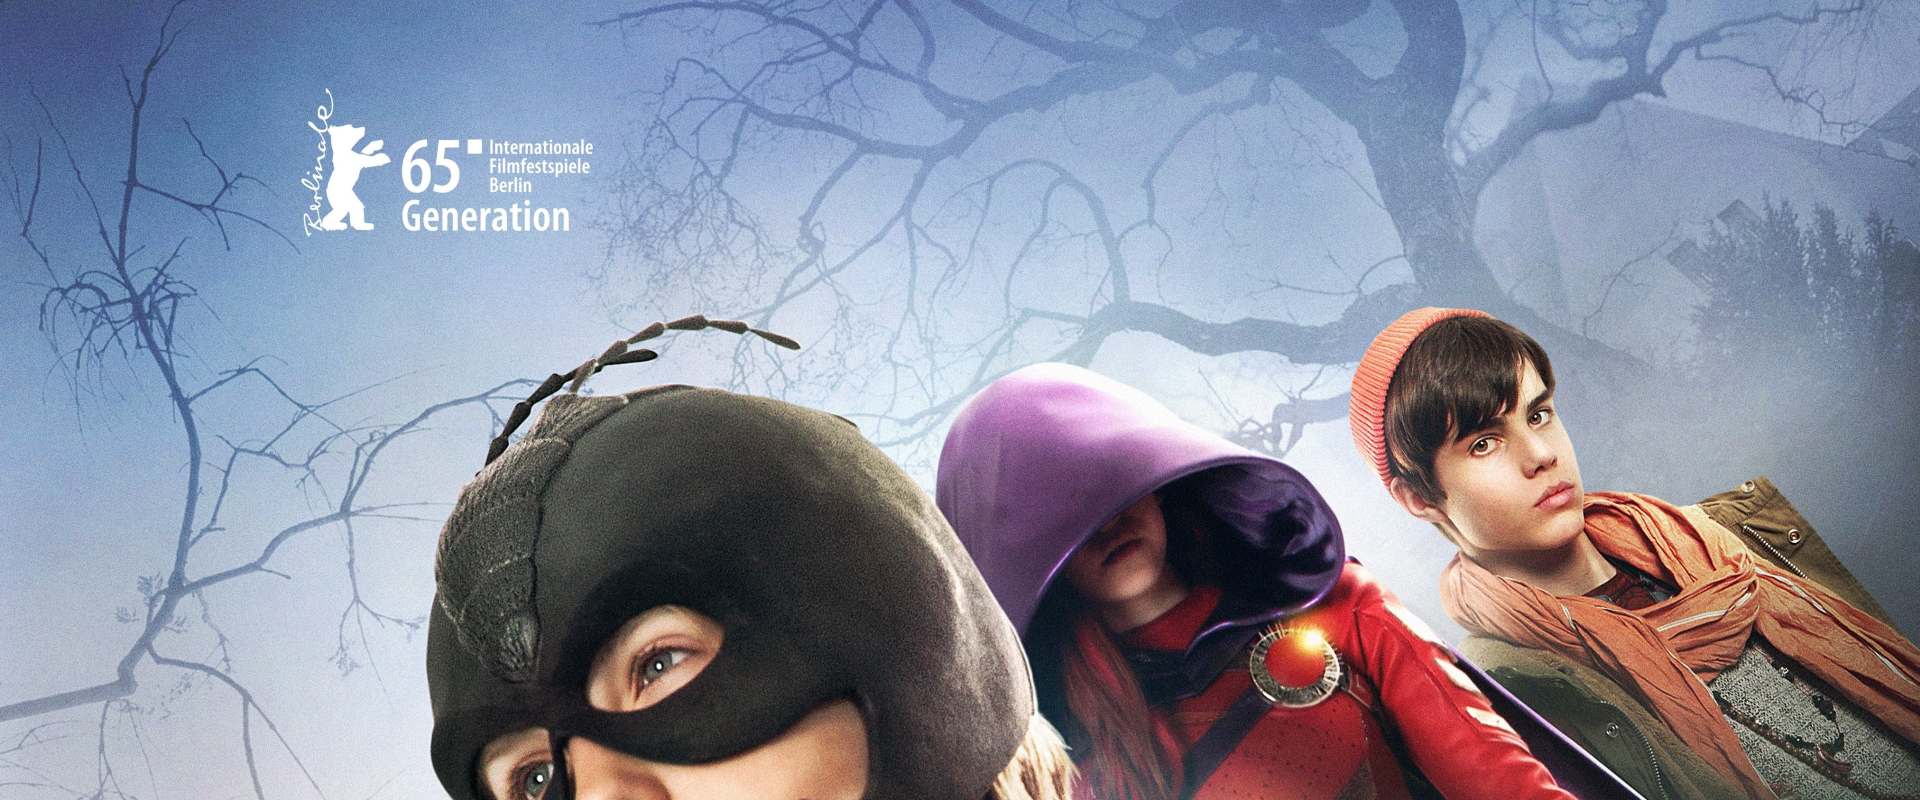 antboy 2 full movie english online